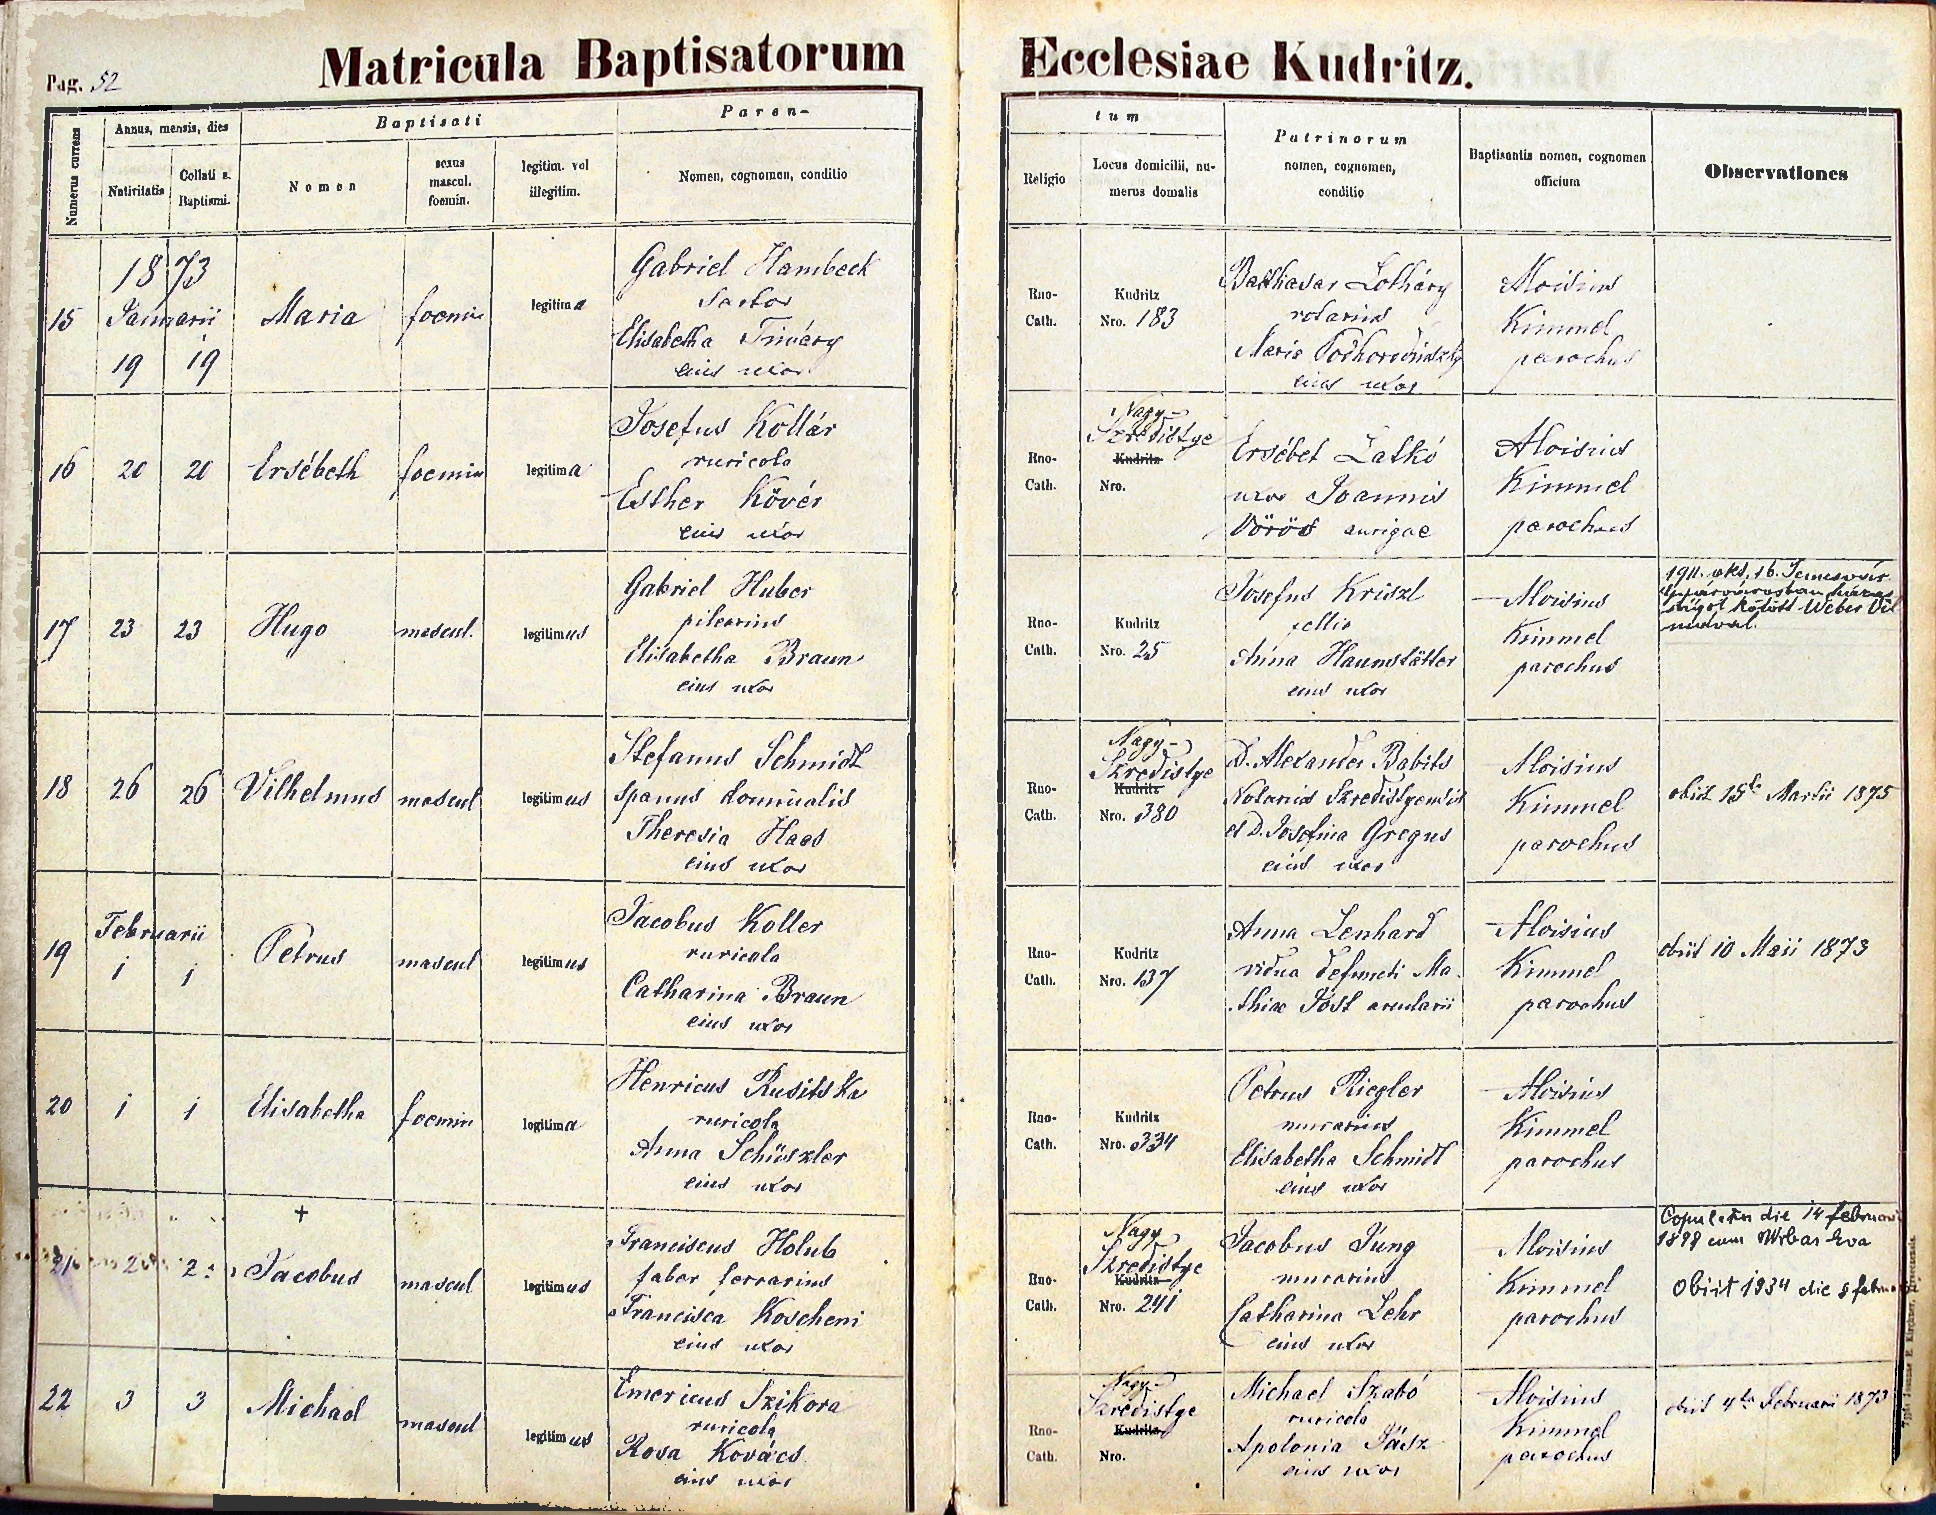 images/church_records/BIRTHS/1884-1899B/1886/052